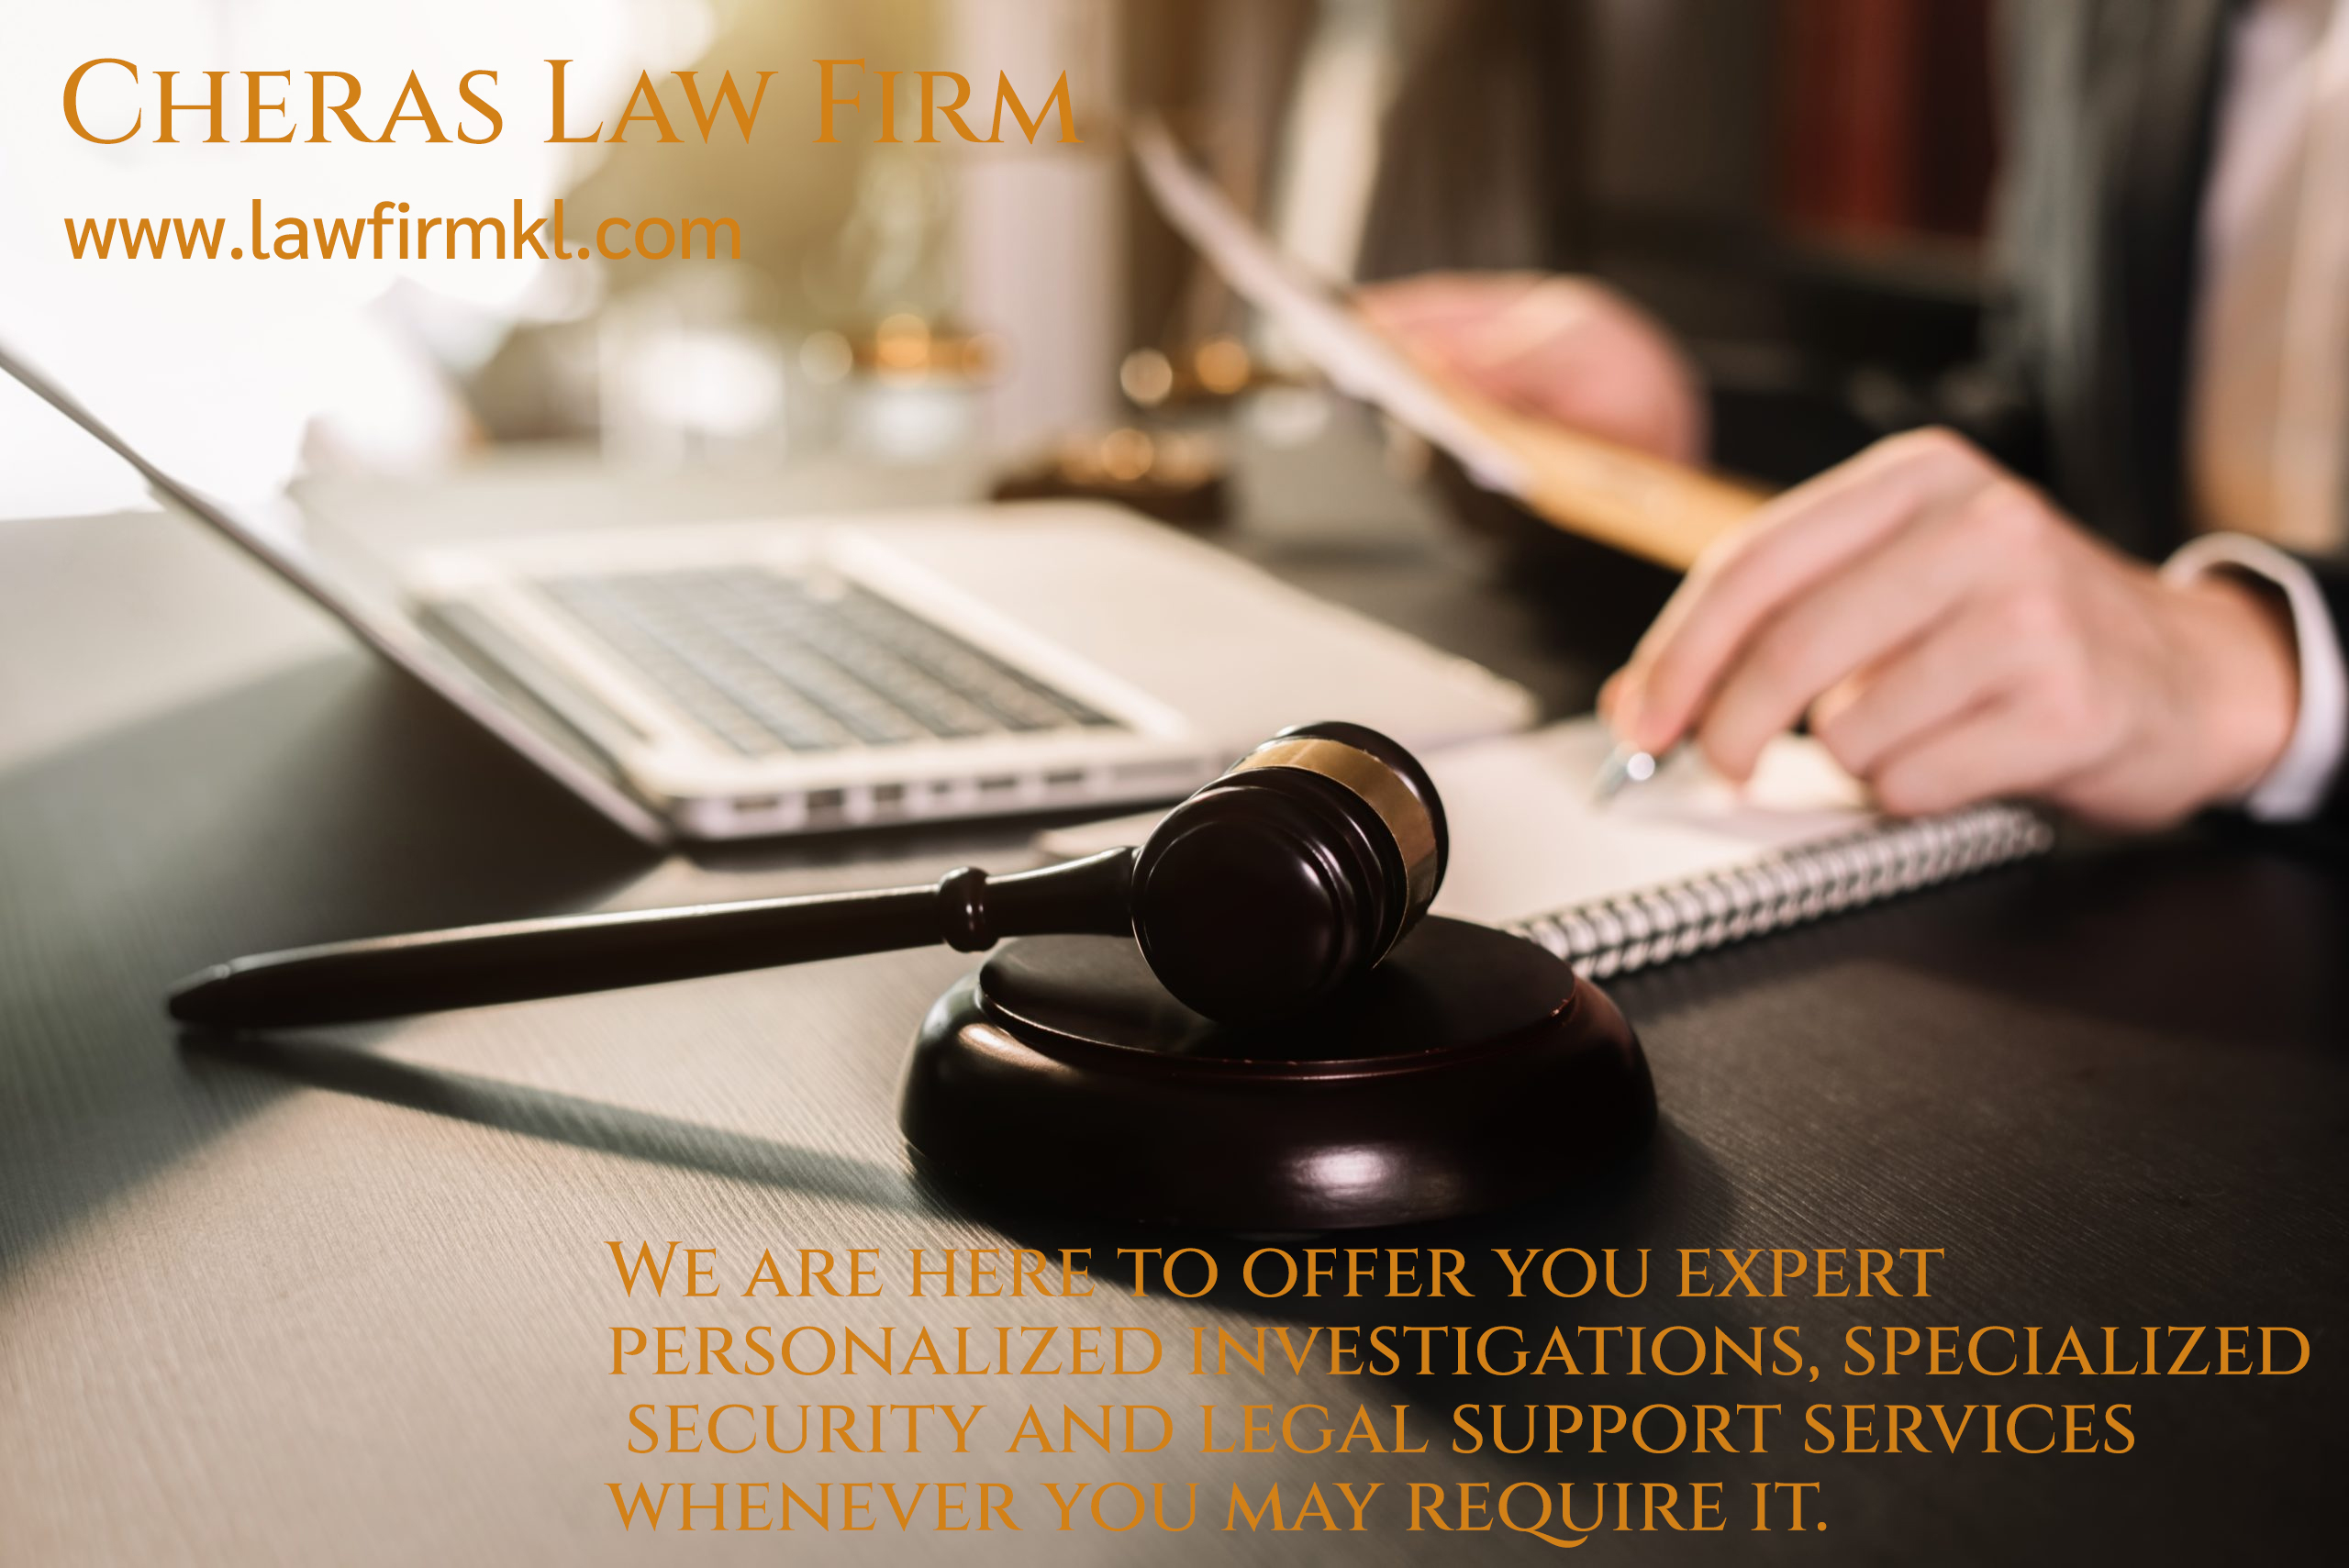 Cheras Law Firm legal service